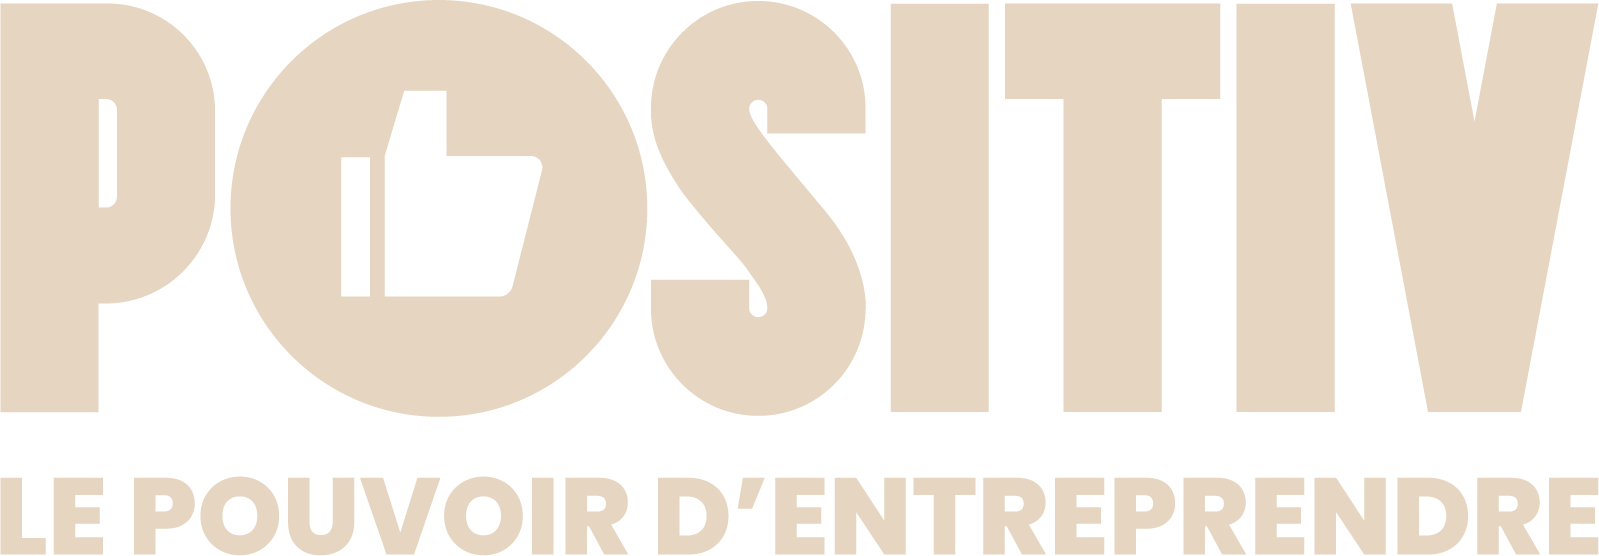 logo positiv